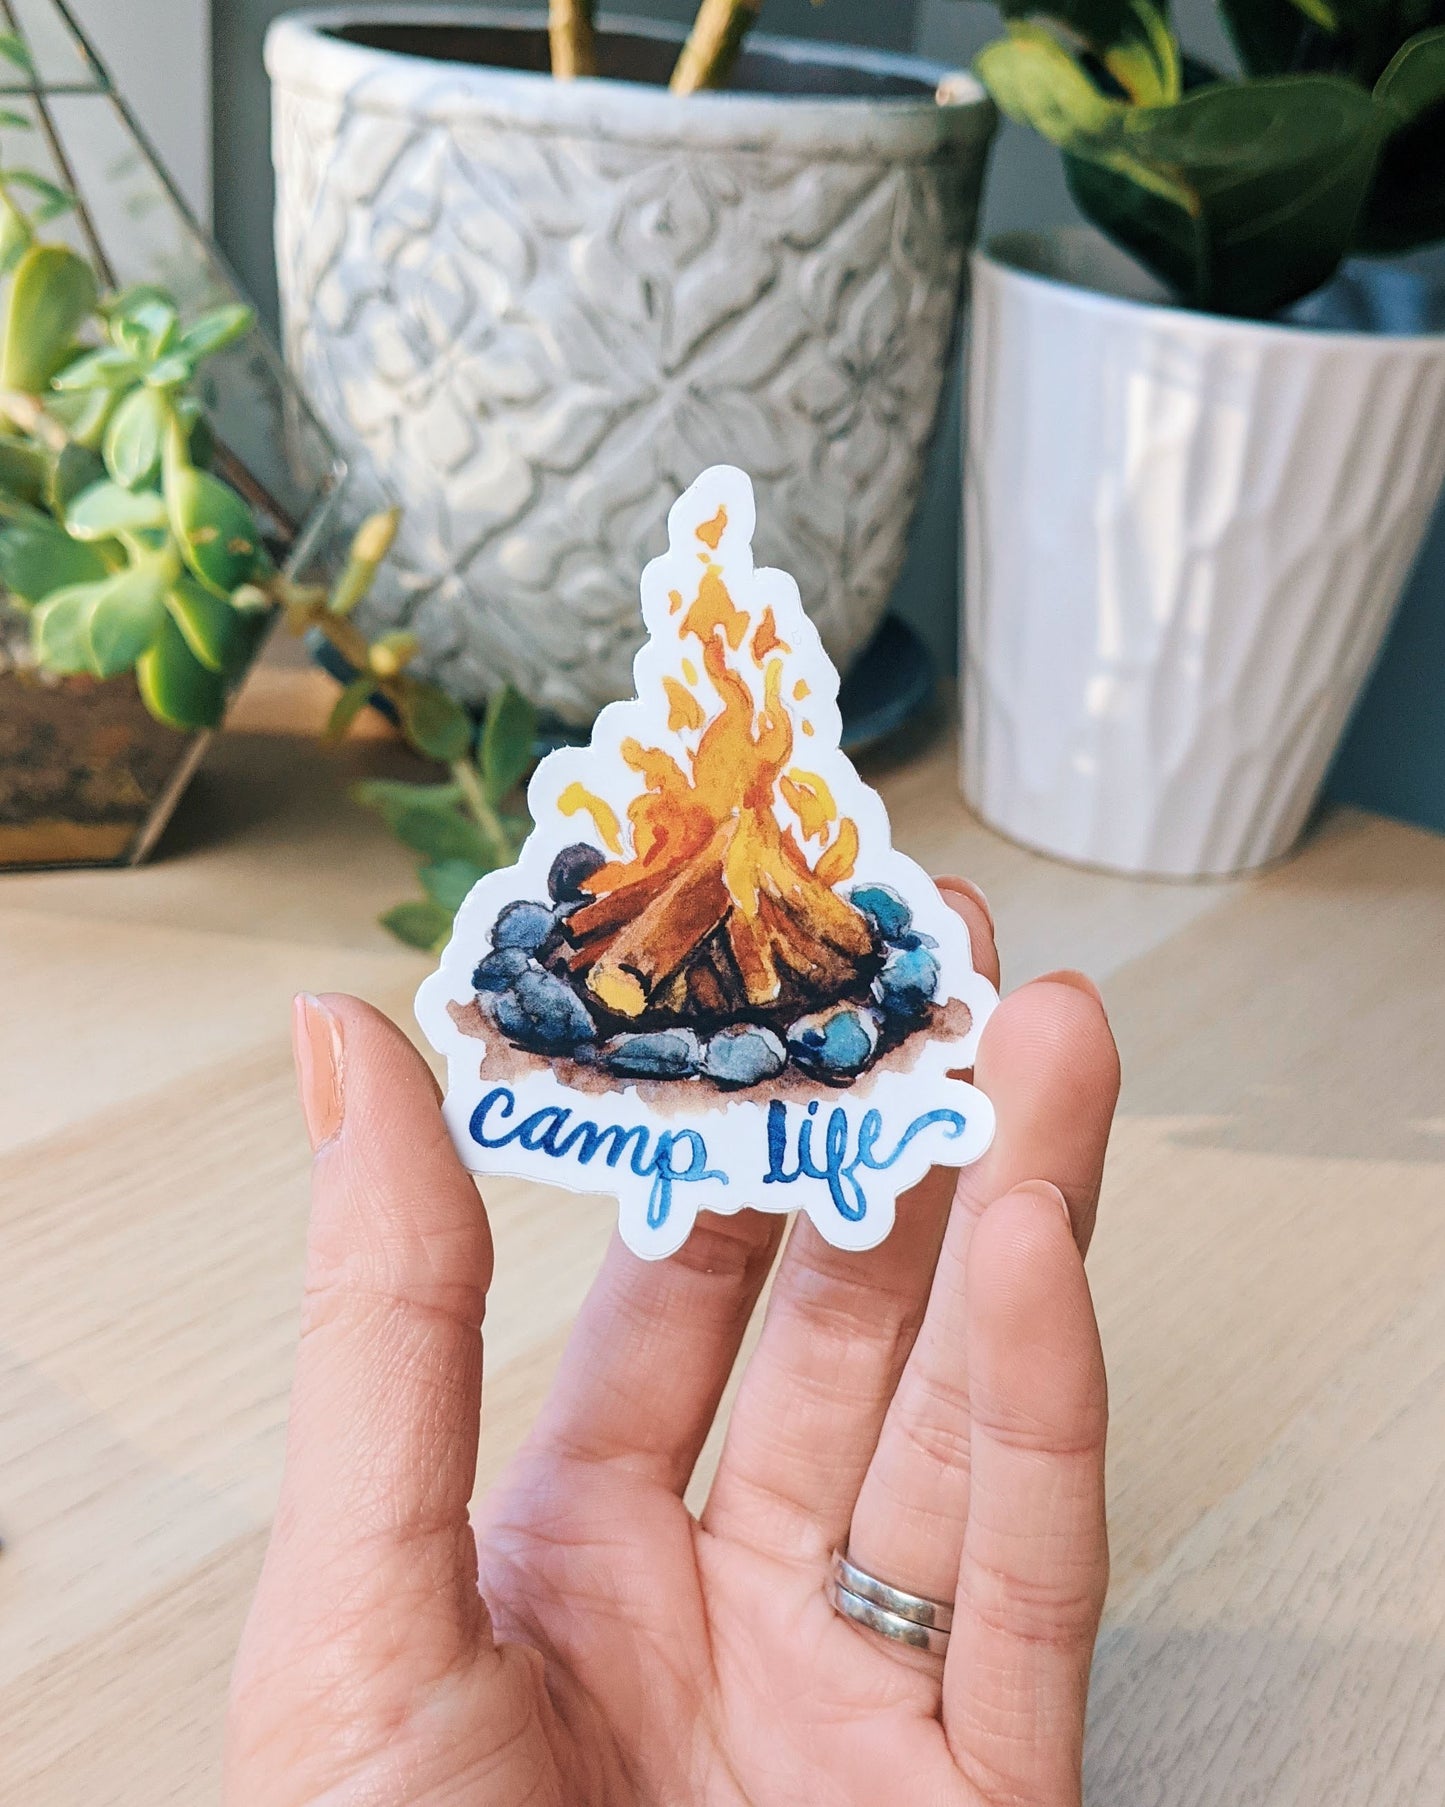 Camp Life - vinyl sticker - Kim Everhard Art